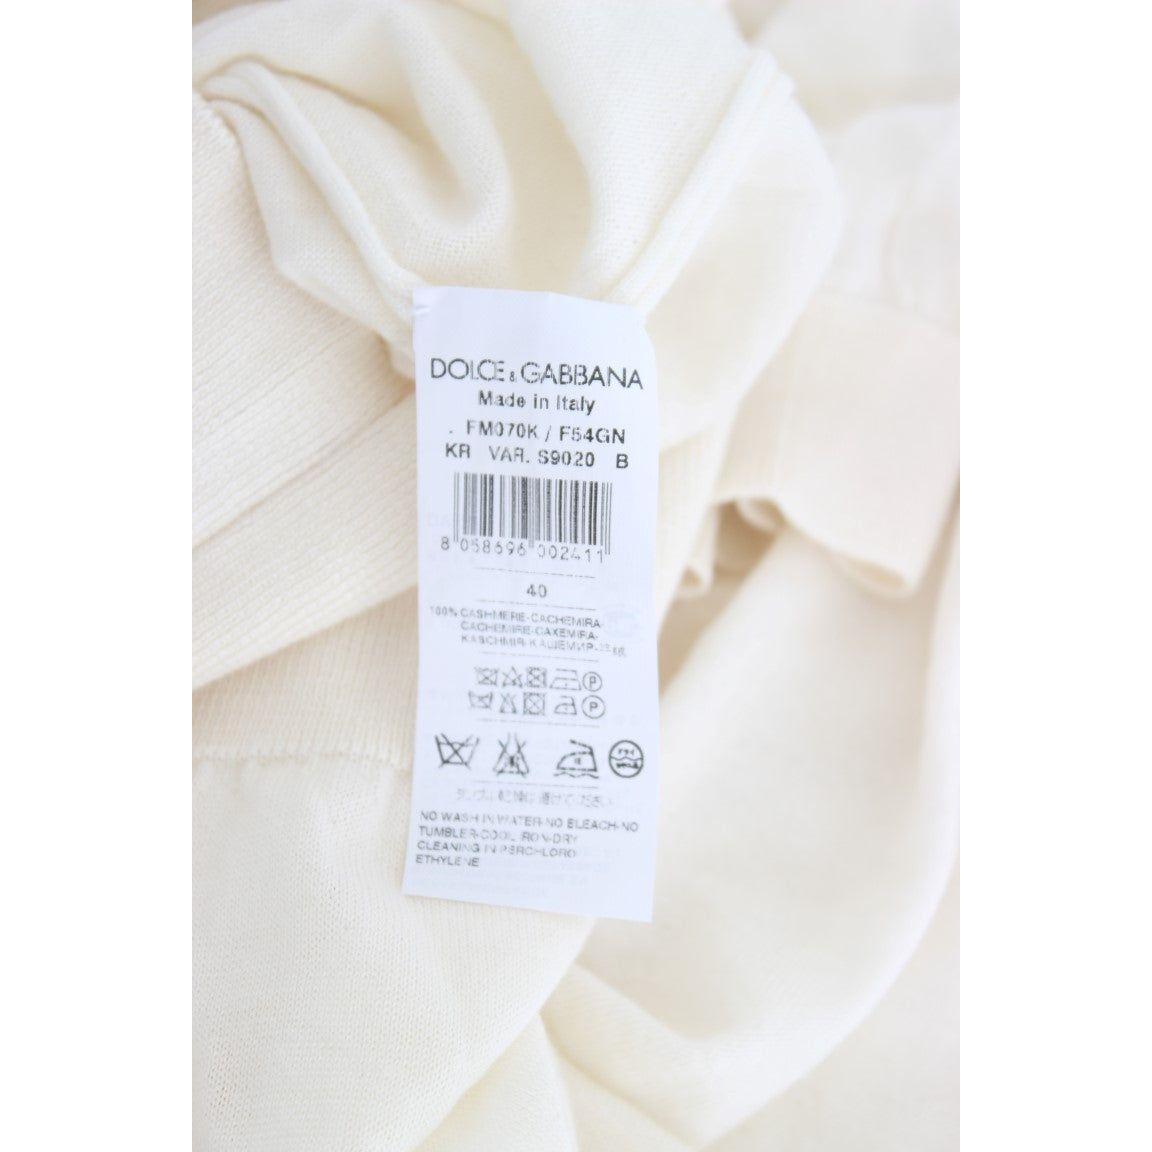 Dolce & Gabbana Elegant White Cashmere Sweater white-100-cashmere-sweater